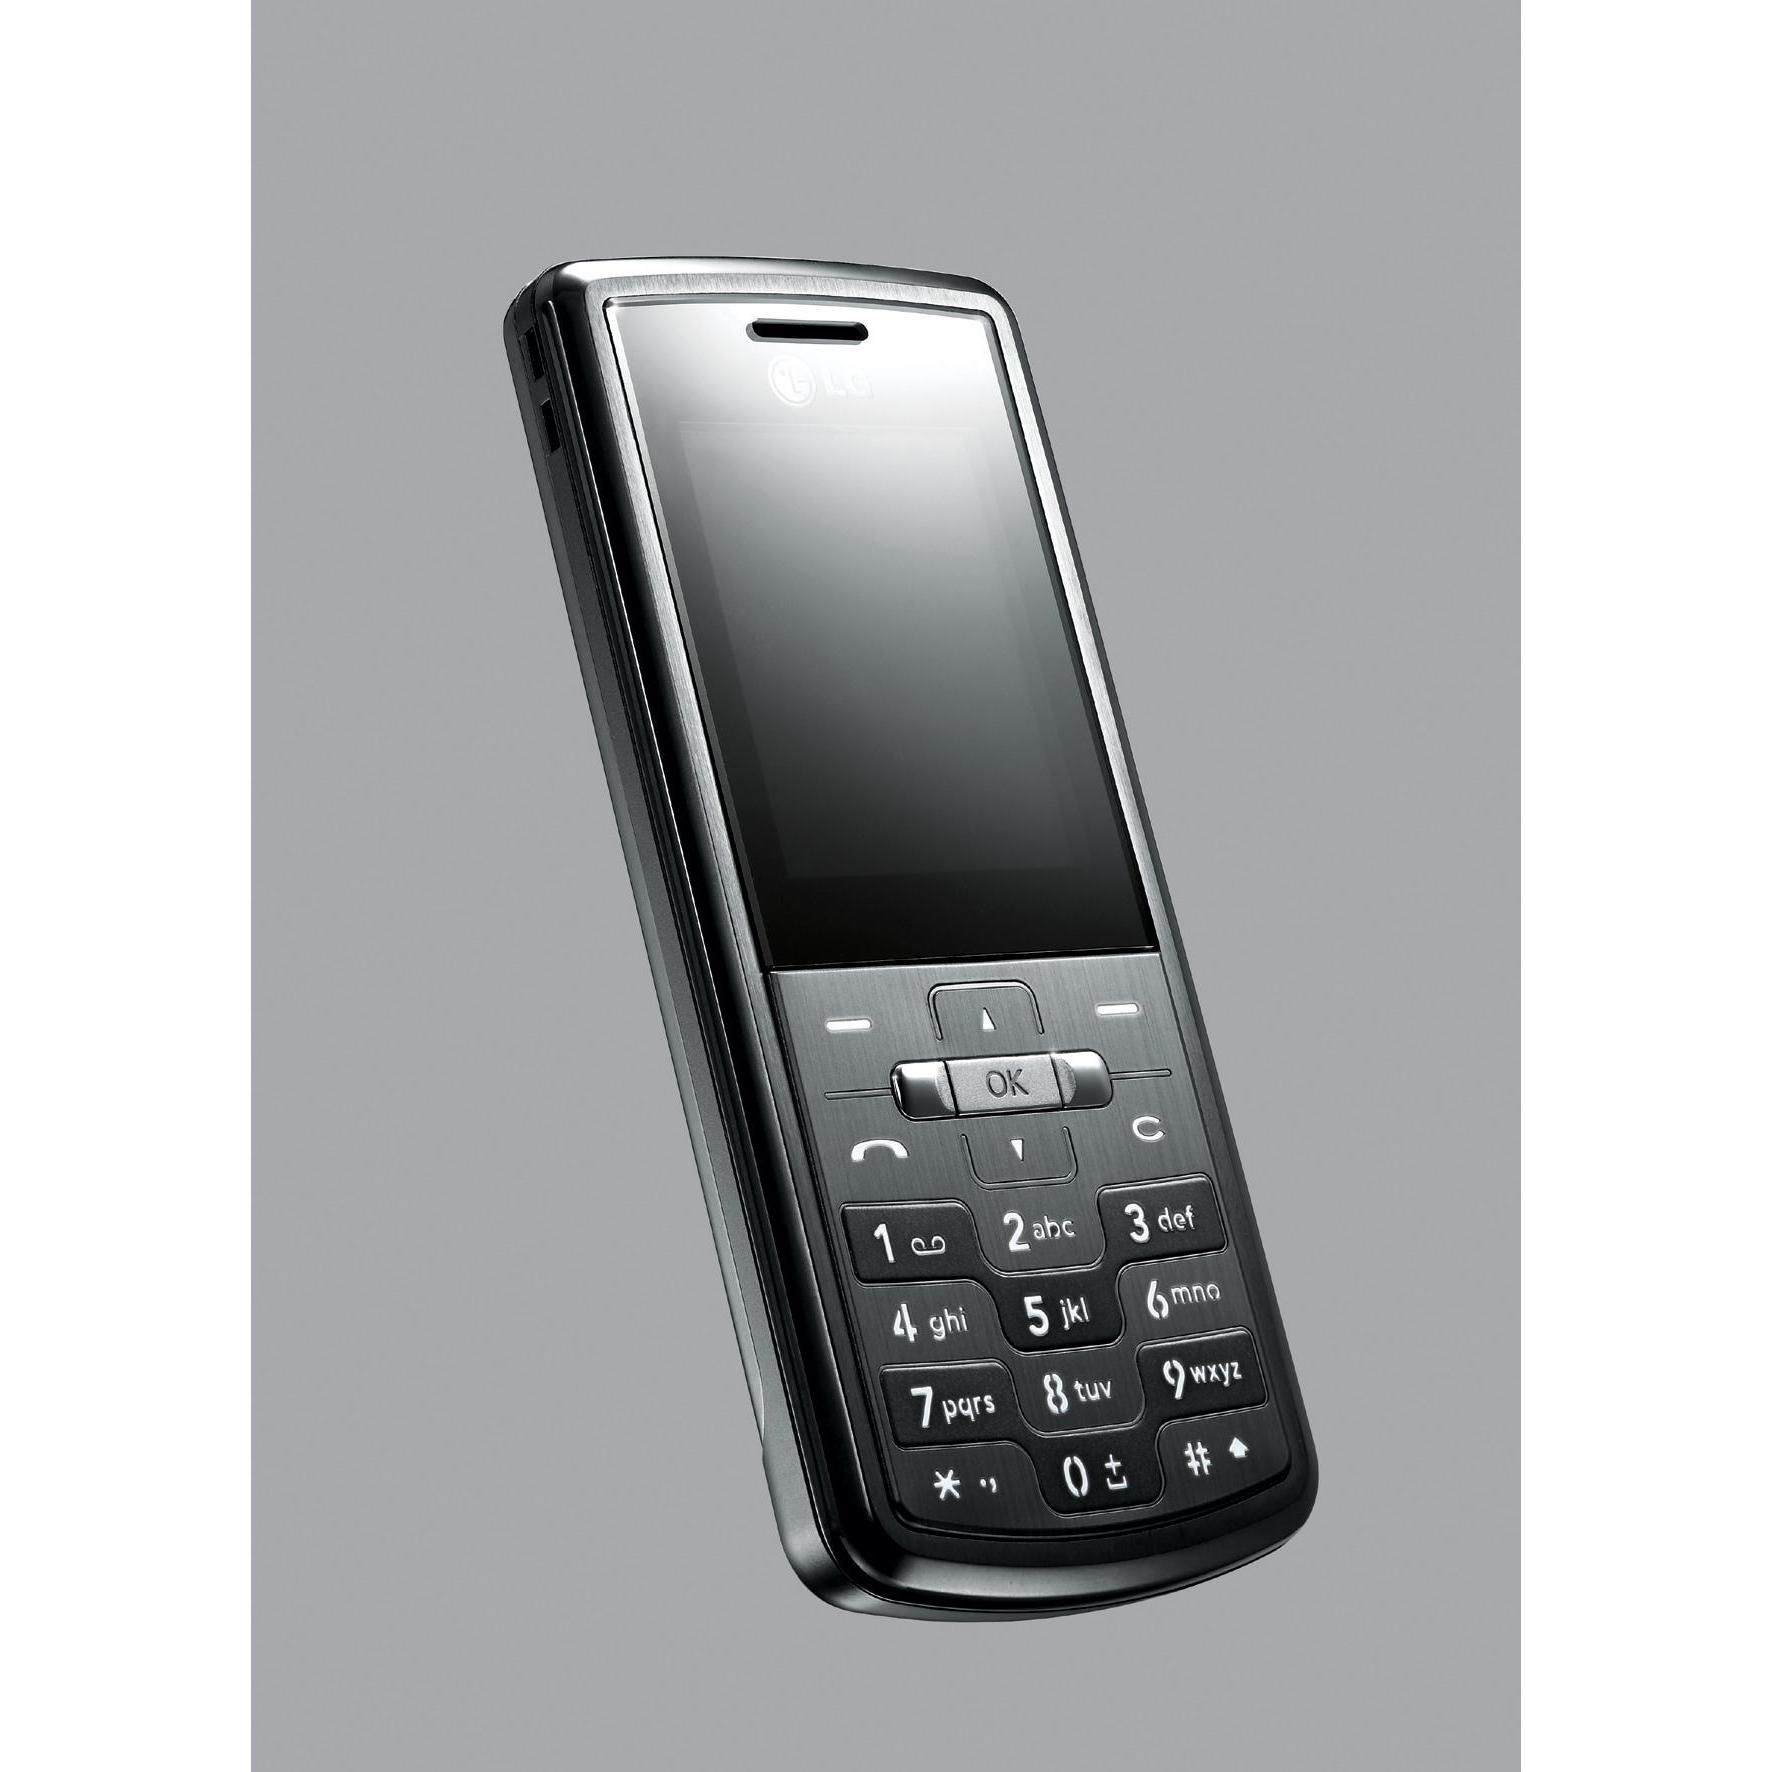 LG KE-770 Titanium Black Mobile Phone imags